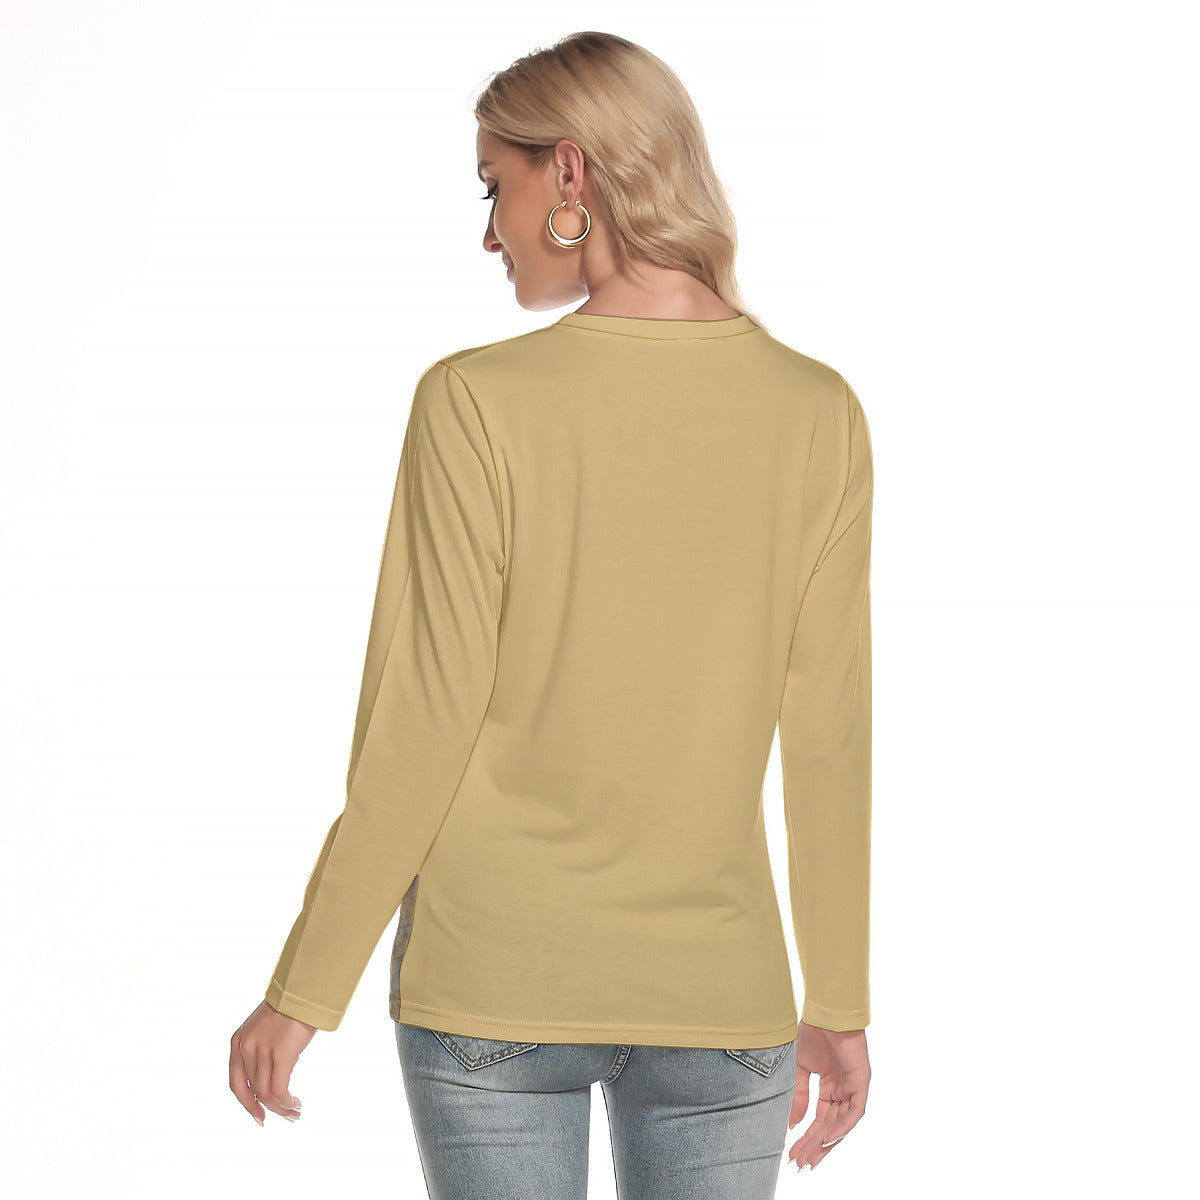 Fantacy 173a -- Women's O-neck Long Sleeve T-shirt